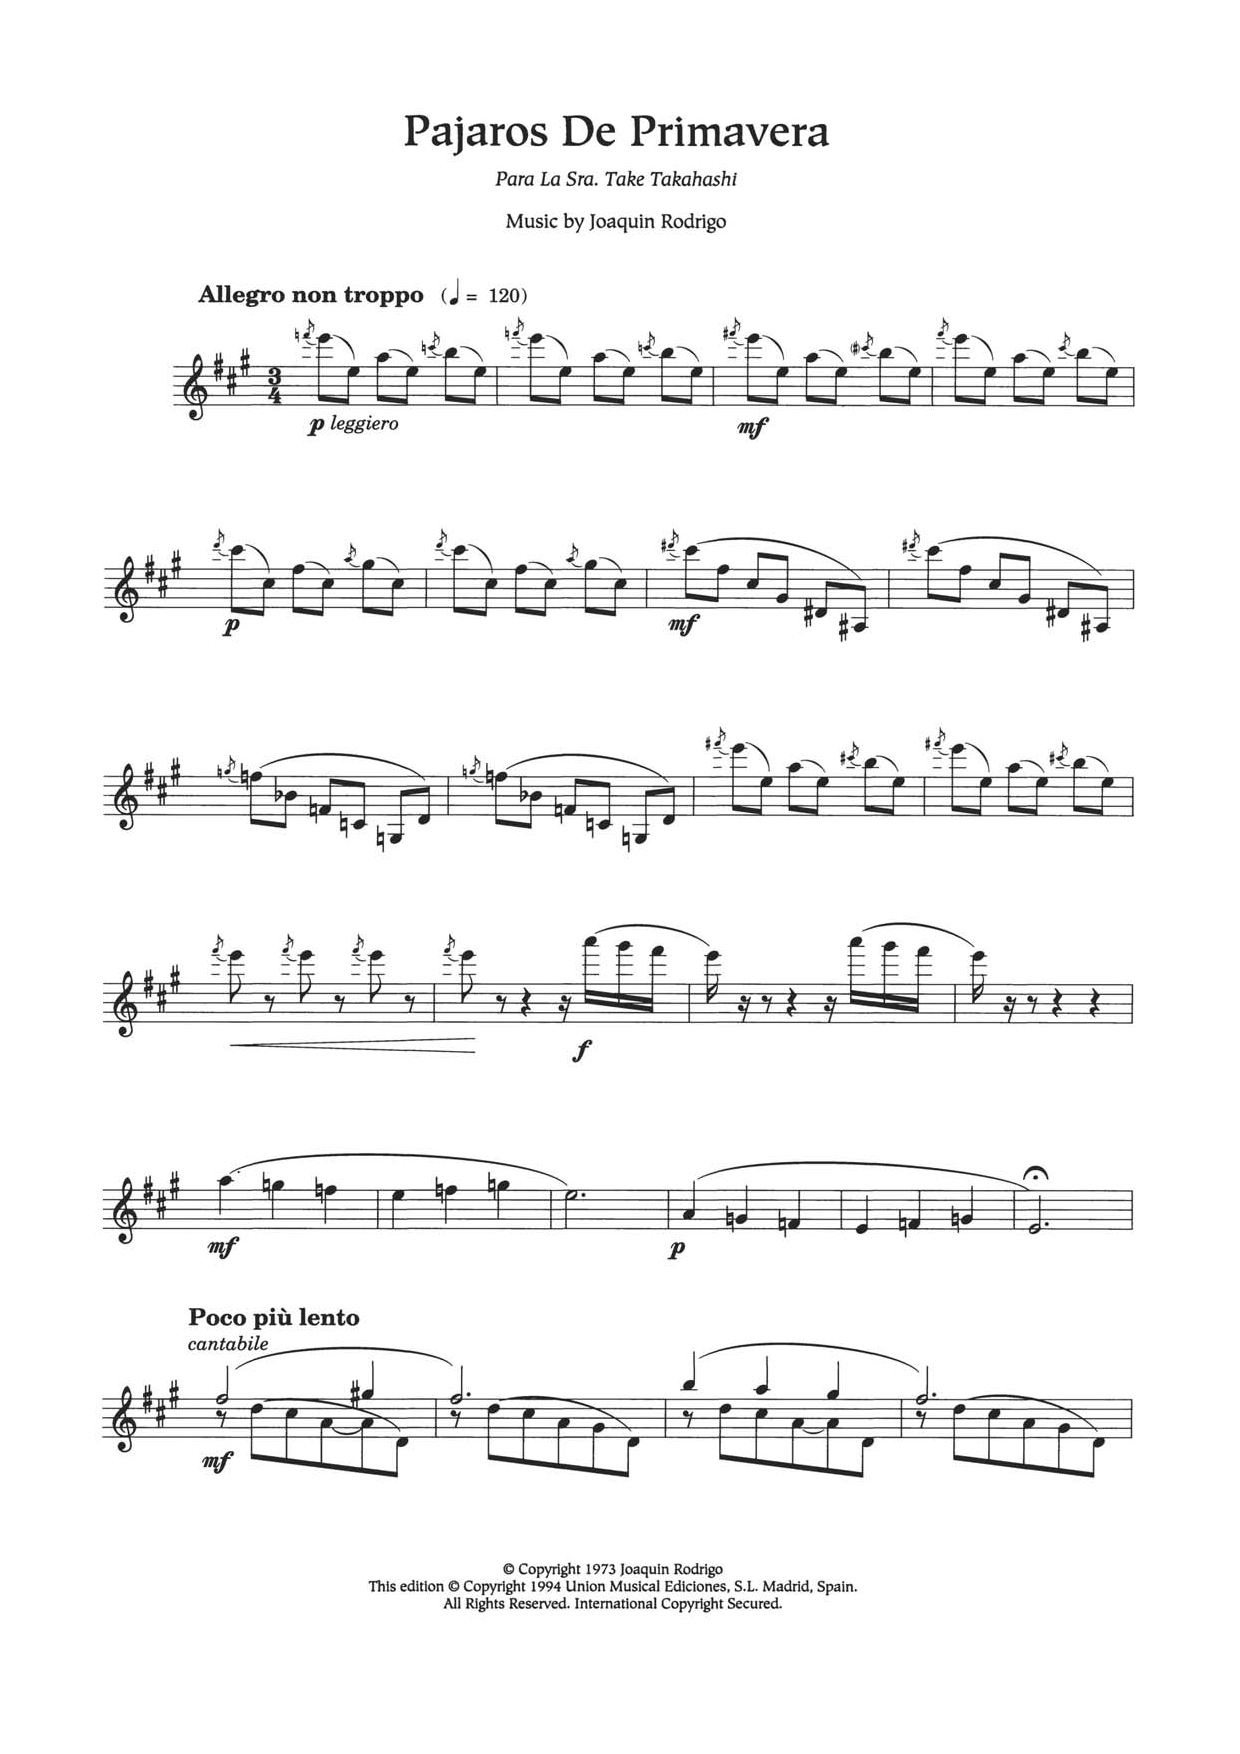 Joaquín Rodrigo Pajaros De Primavera Sheet Music Notes & Chords for Guitar - Download or Print PDF